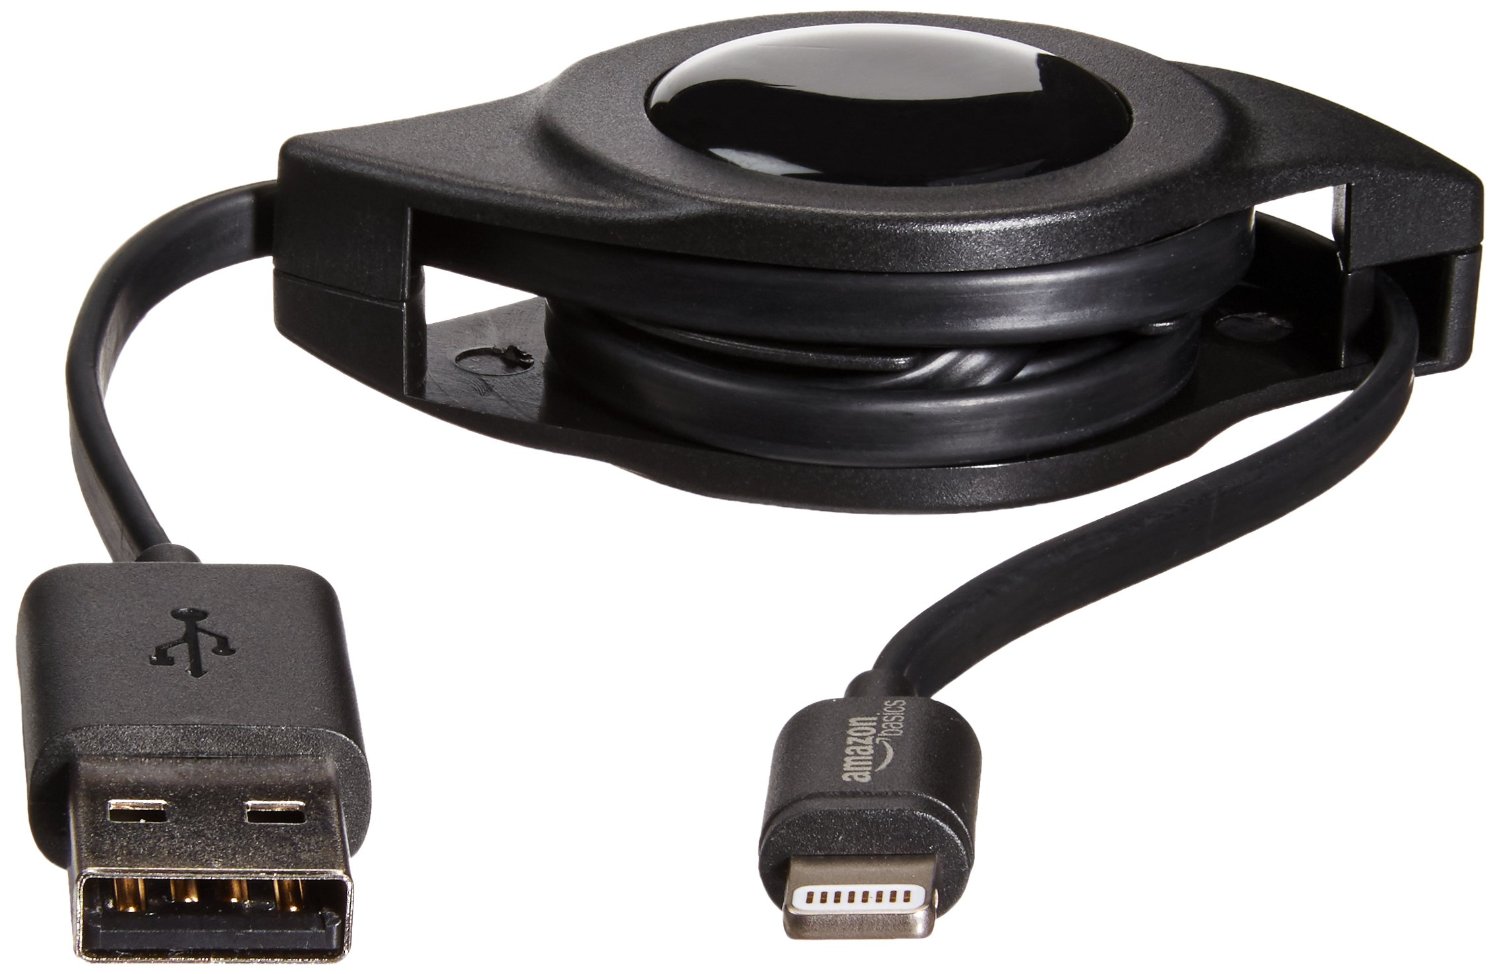 AmazonBasics Retractable USB cable